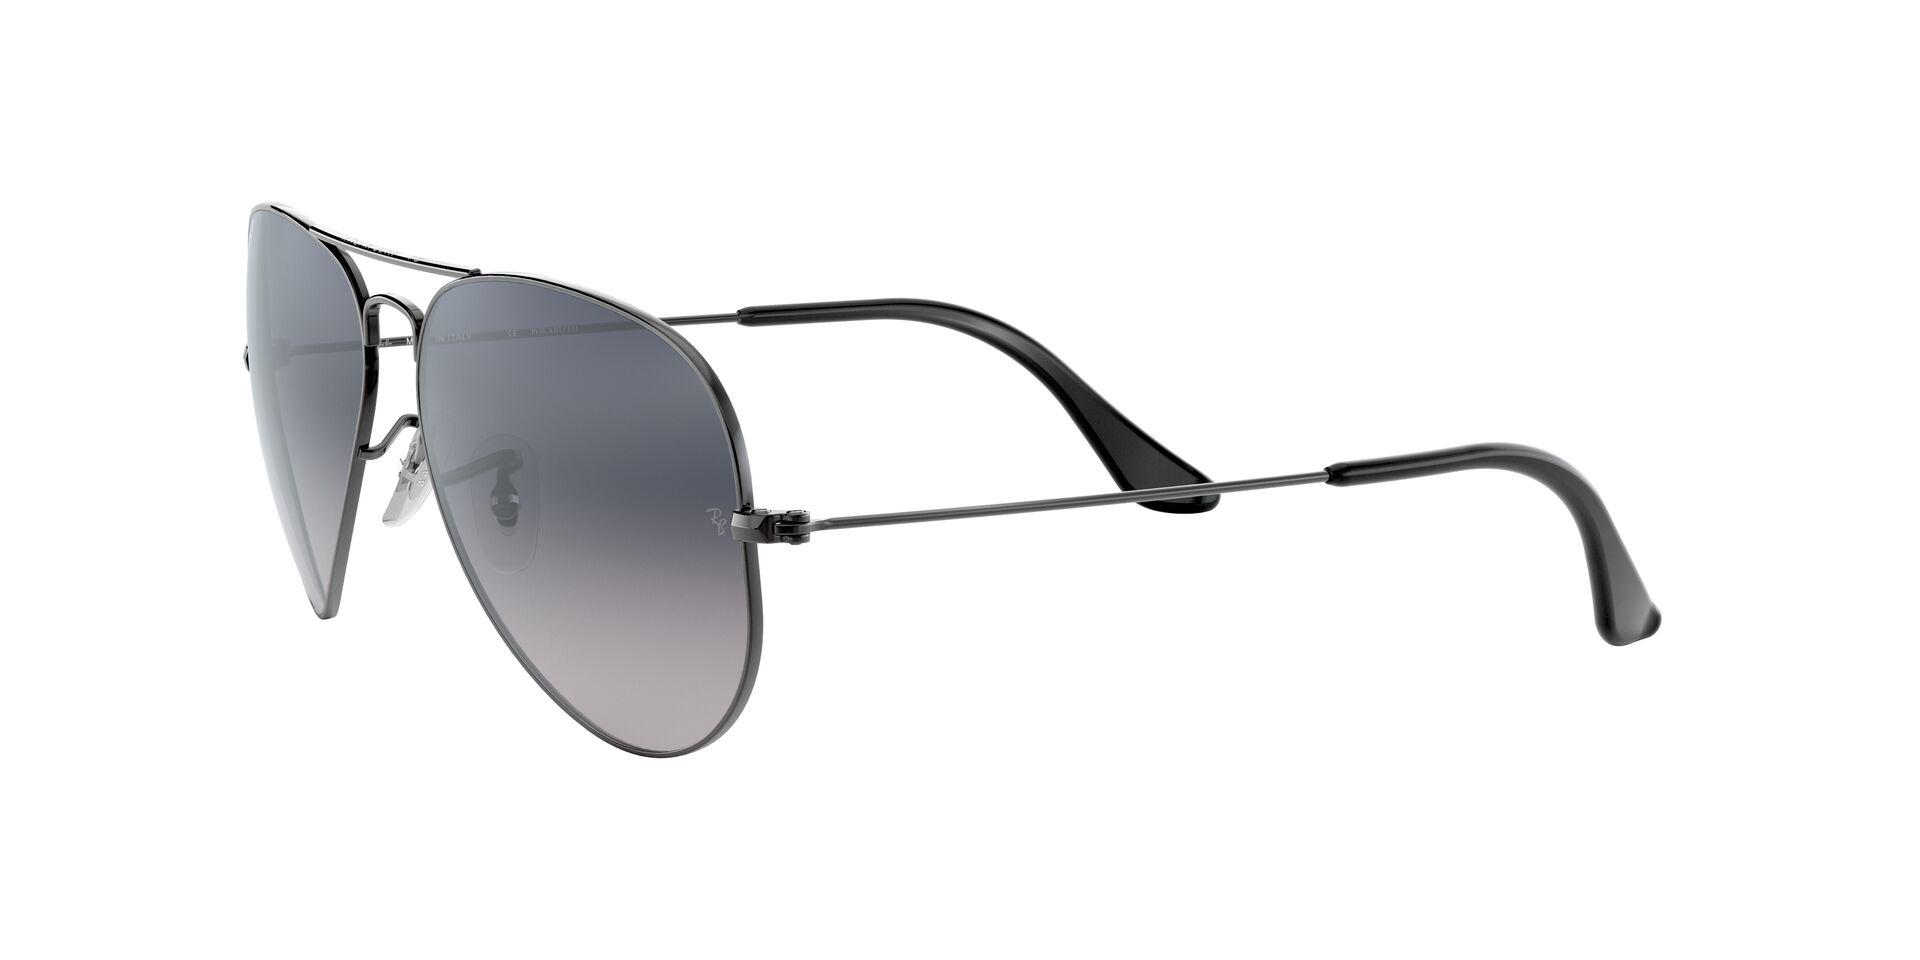 Mắt Kính RAY-BAN AVIATOR LARGE METAL - RB3025 004/78 -Sunglasses